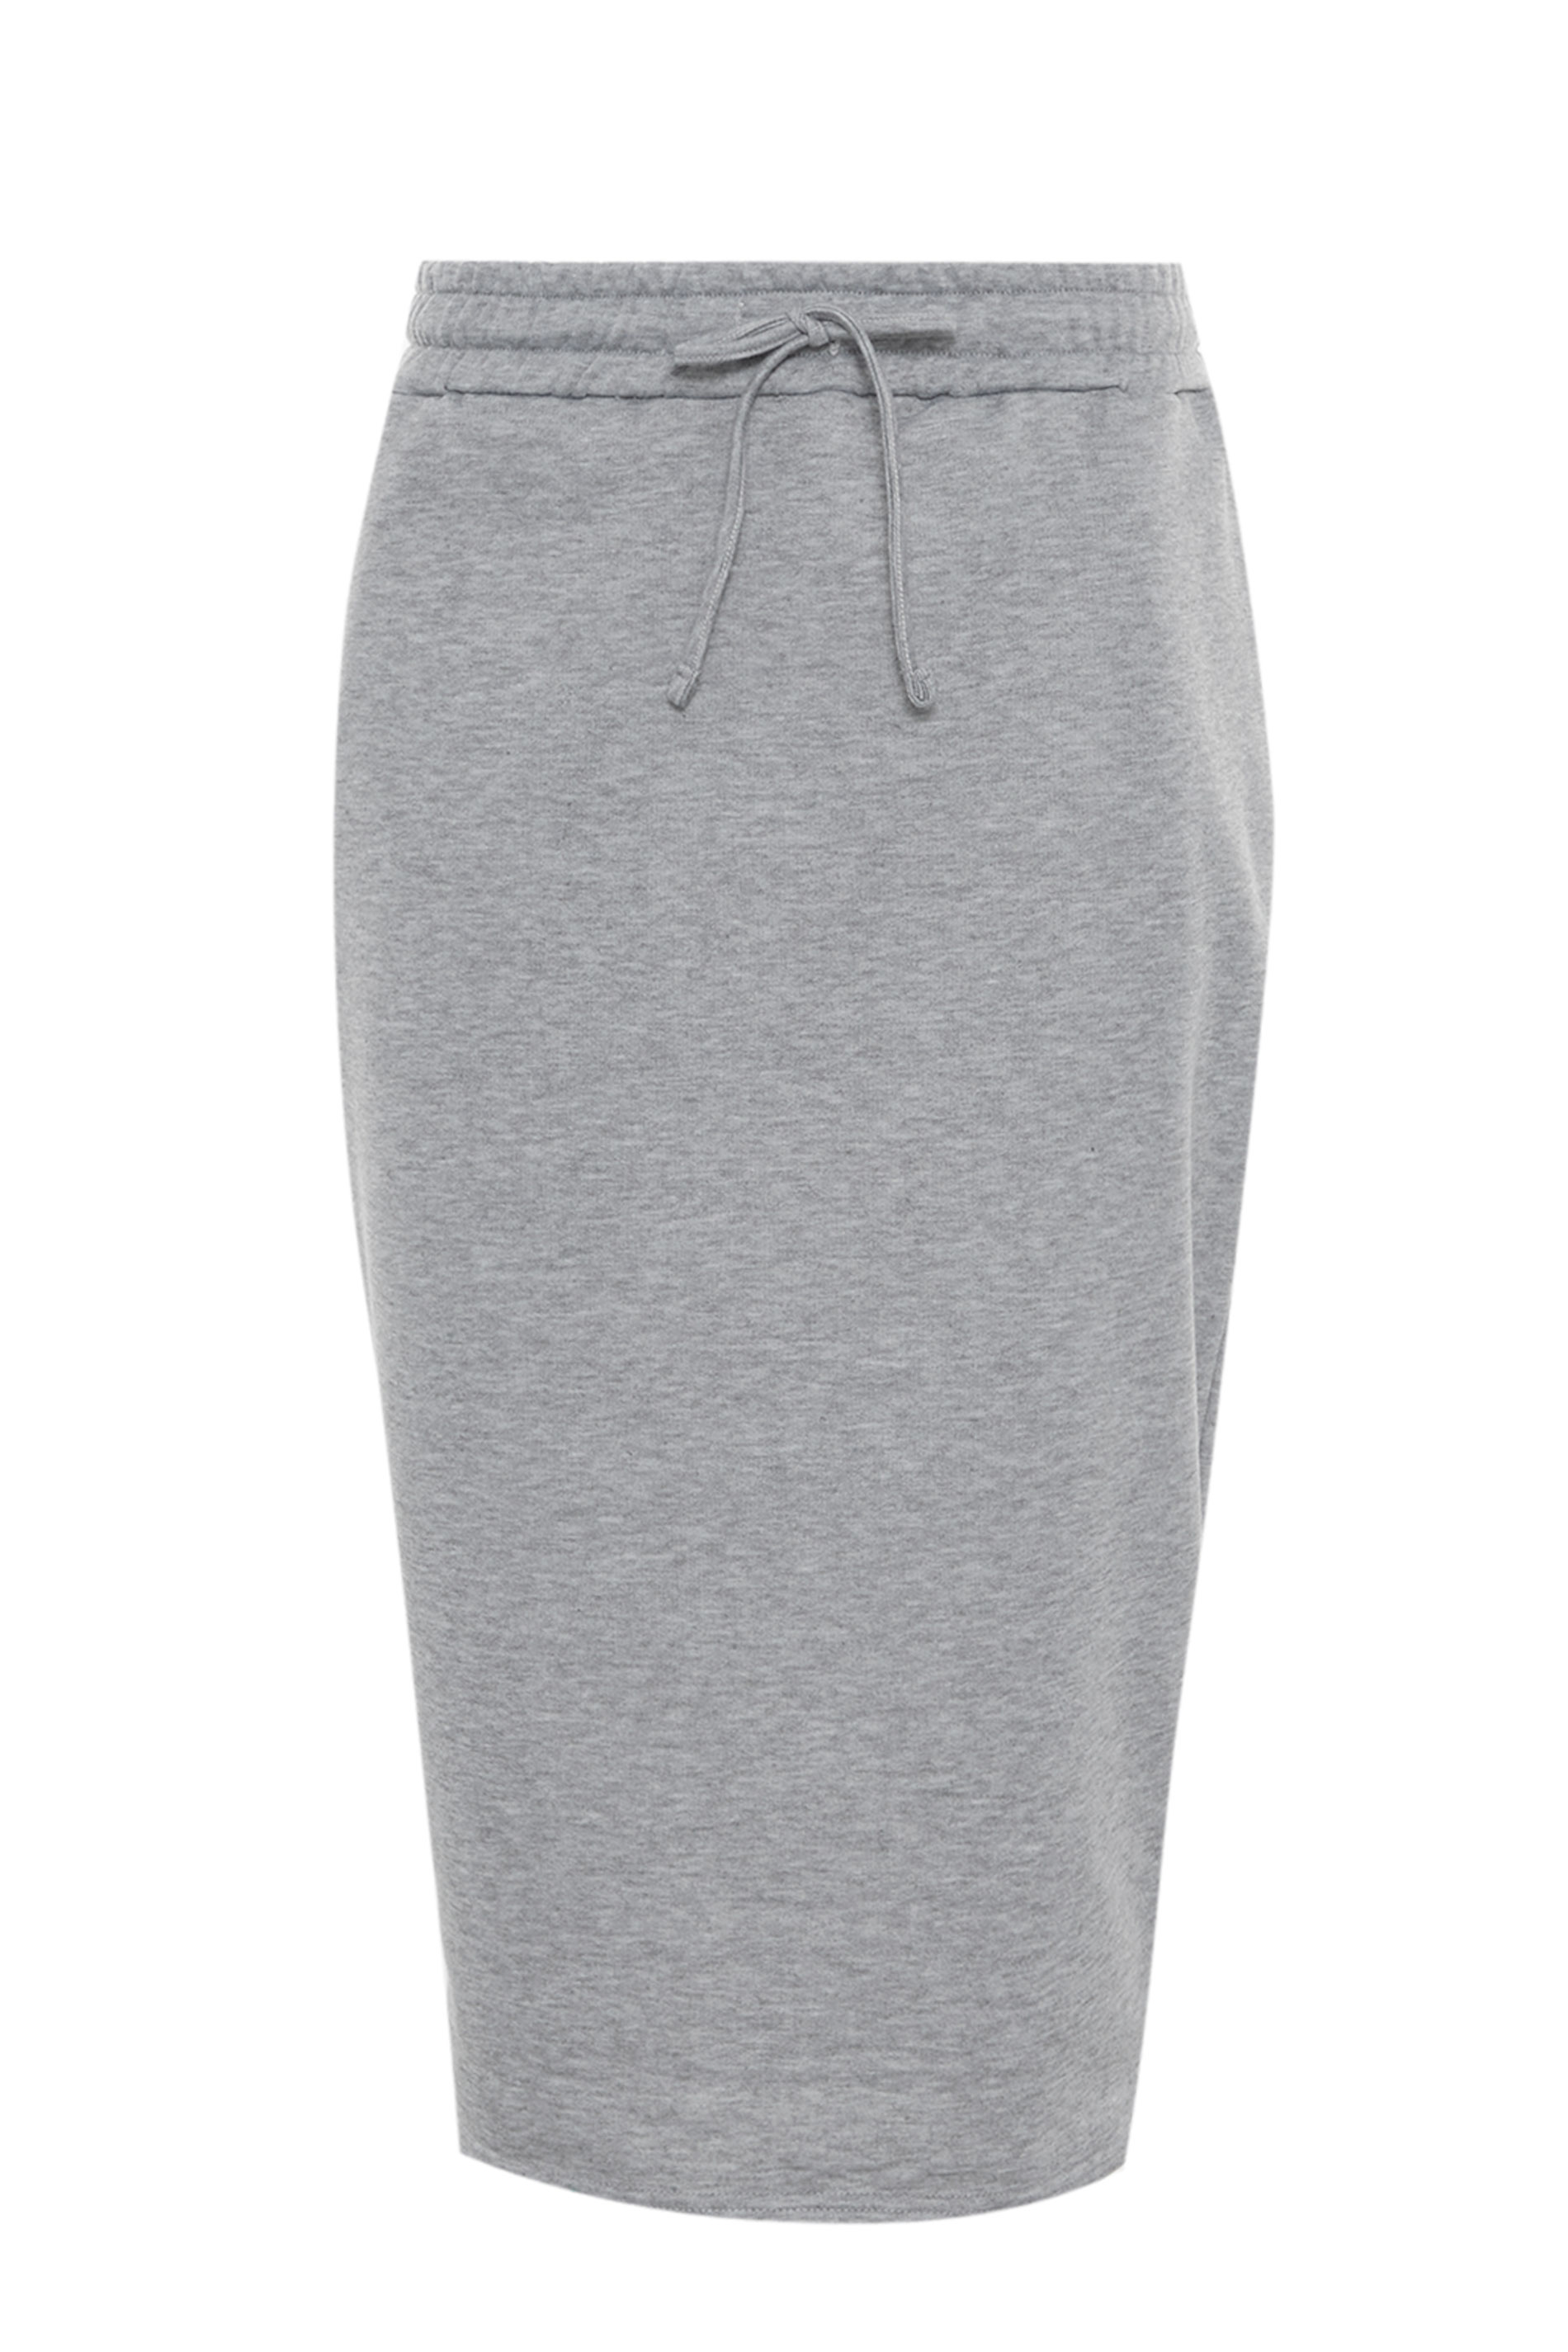 LTS Grey Marl Jersey Sweat Skirt | Long Tall Sally